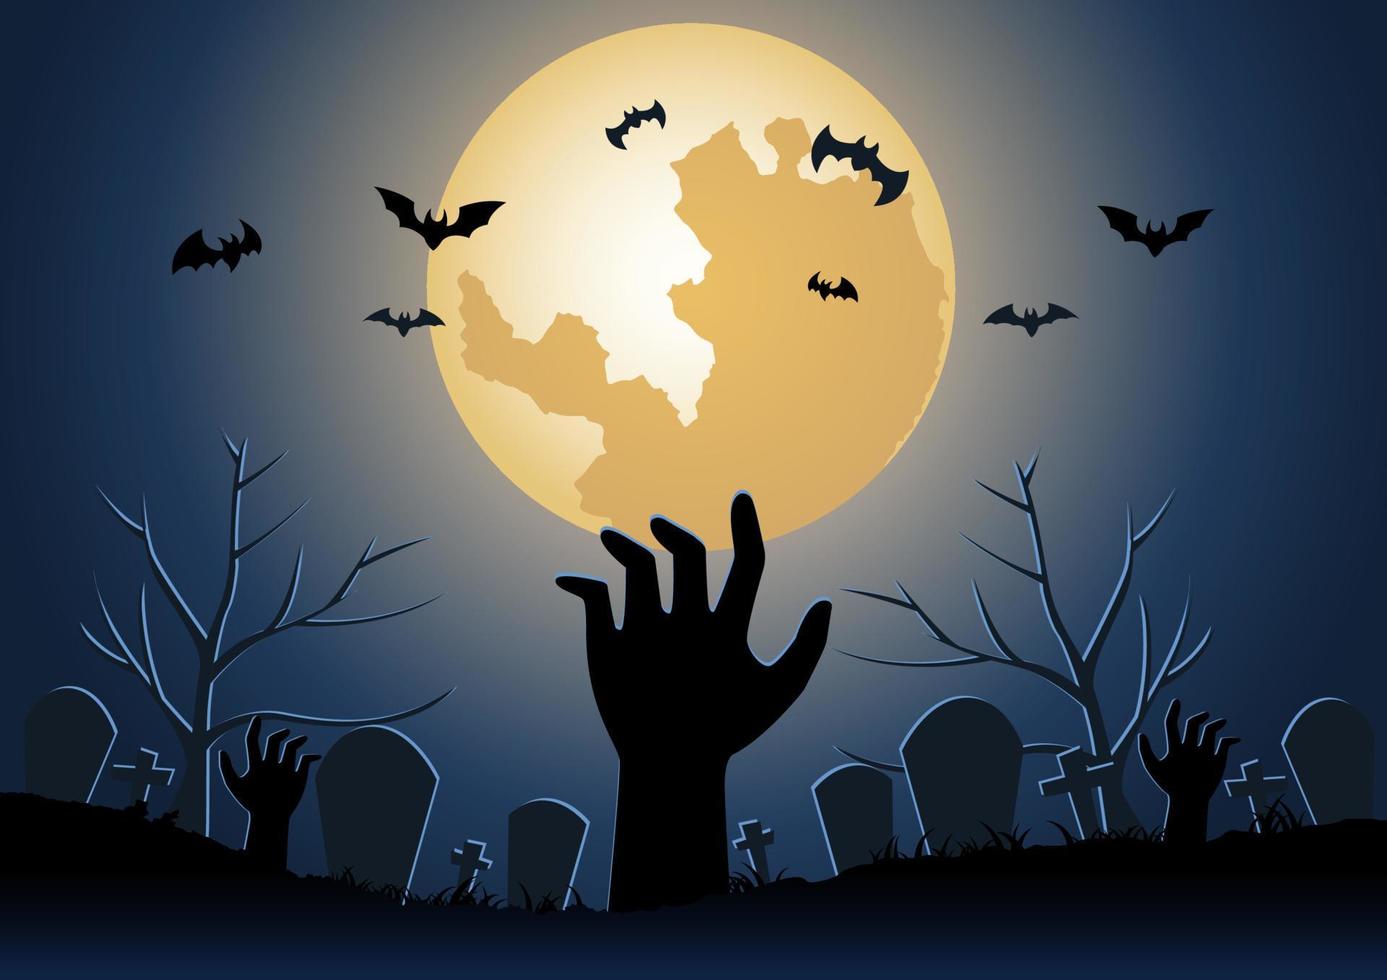 Halloween background with zombie hand raise from underworld on Halloween night vector